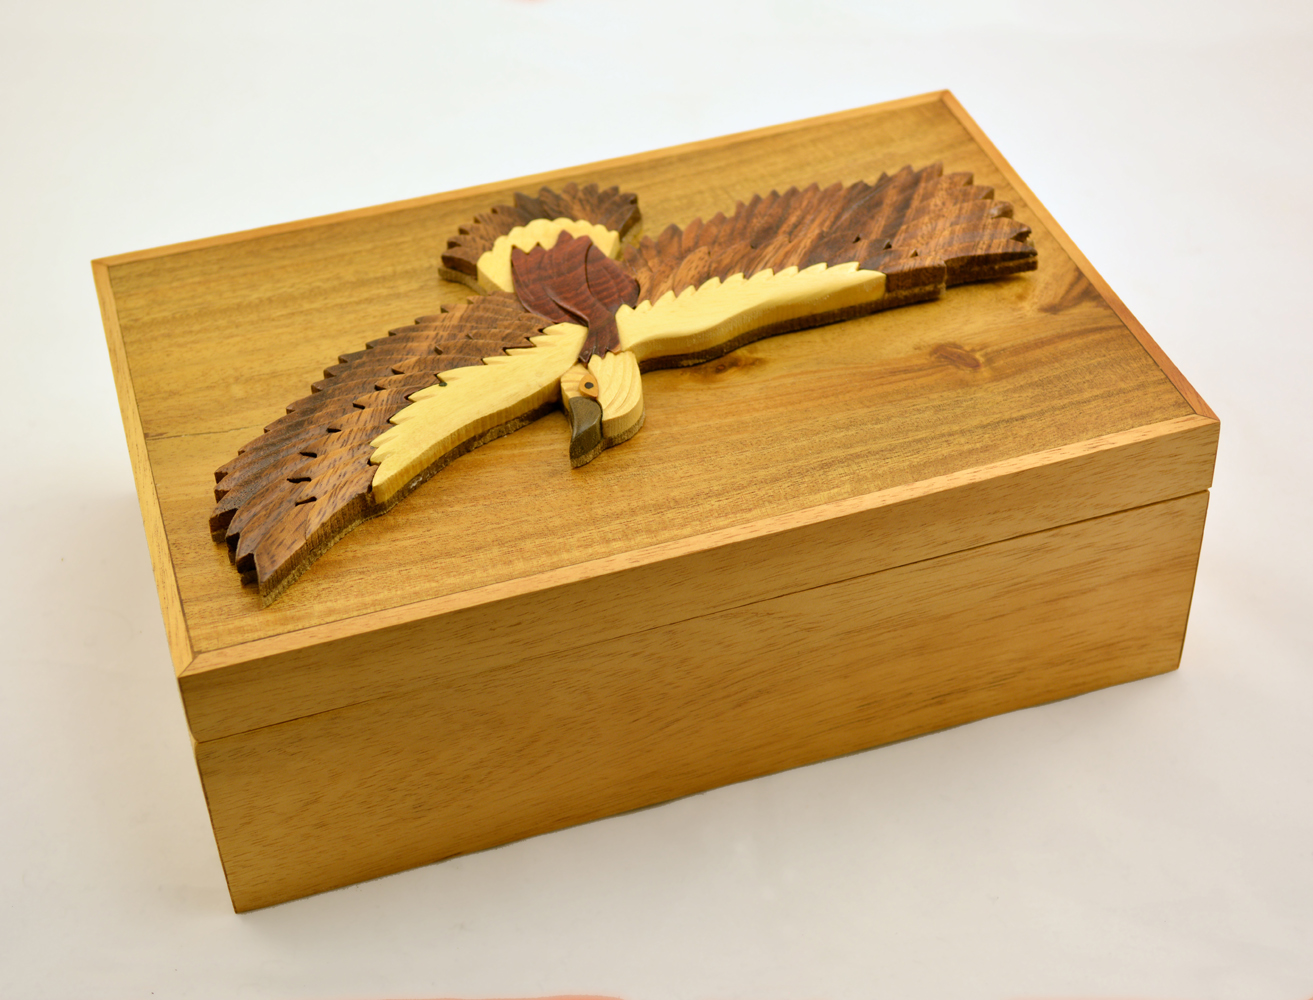 Bald eagle cigar box